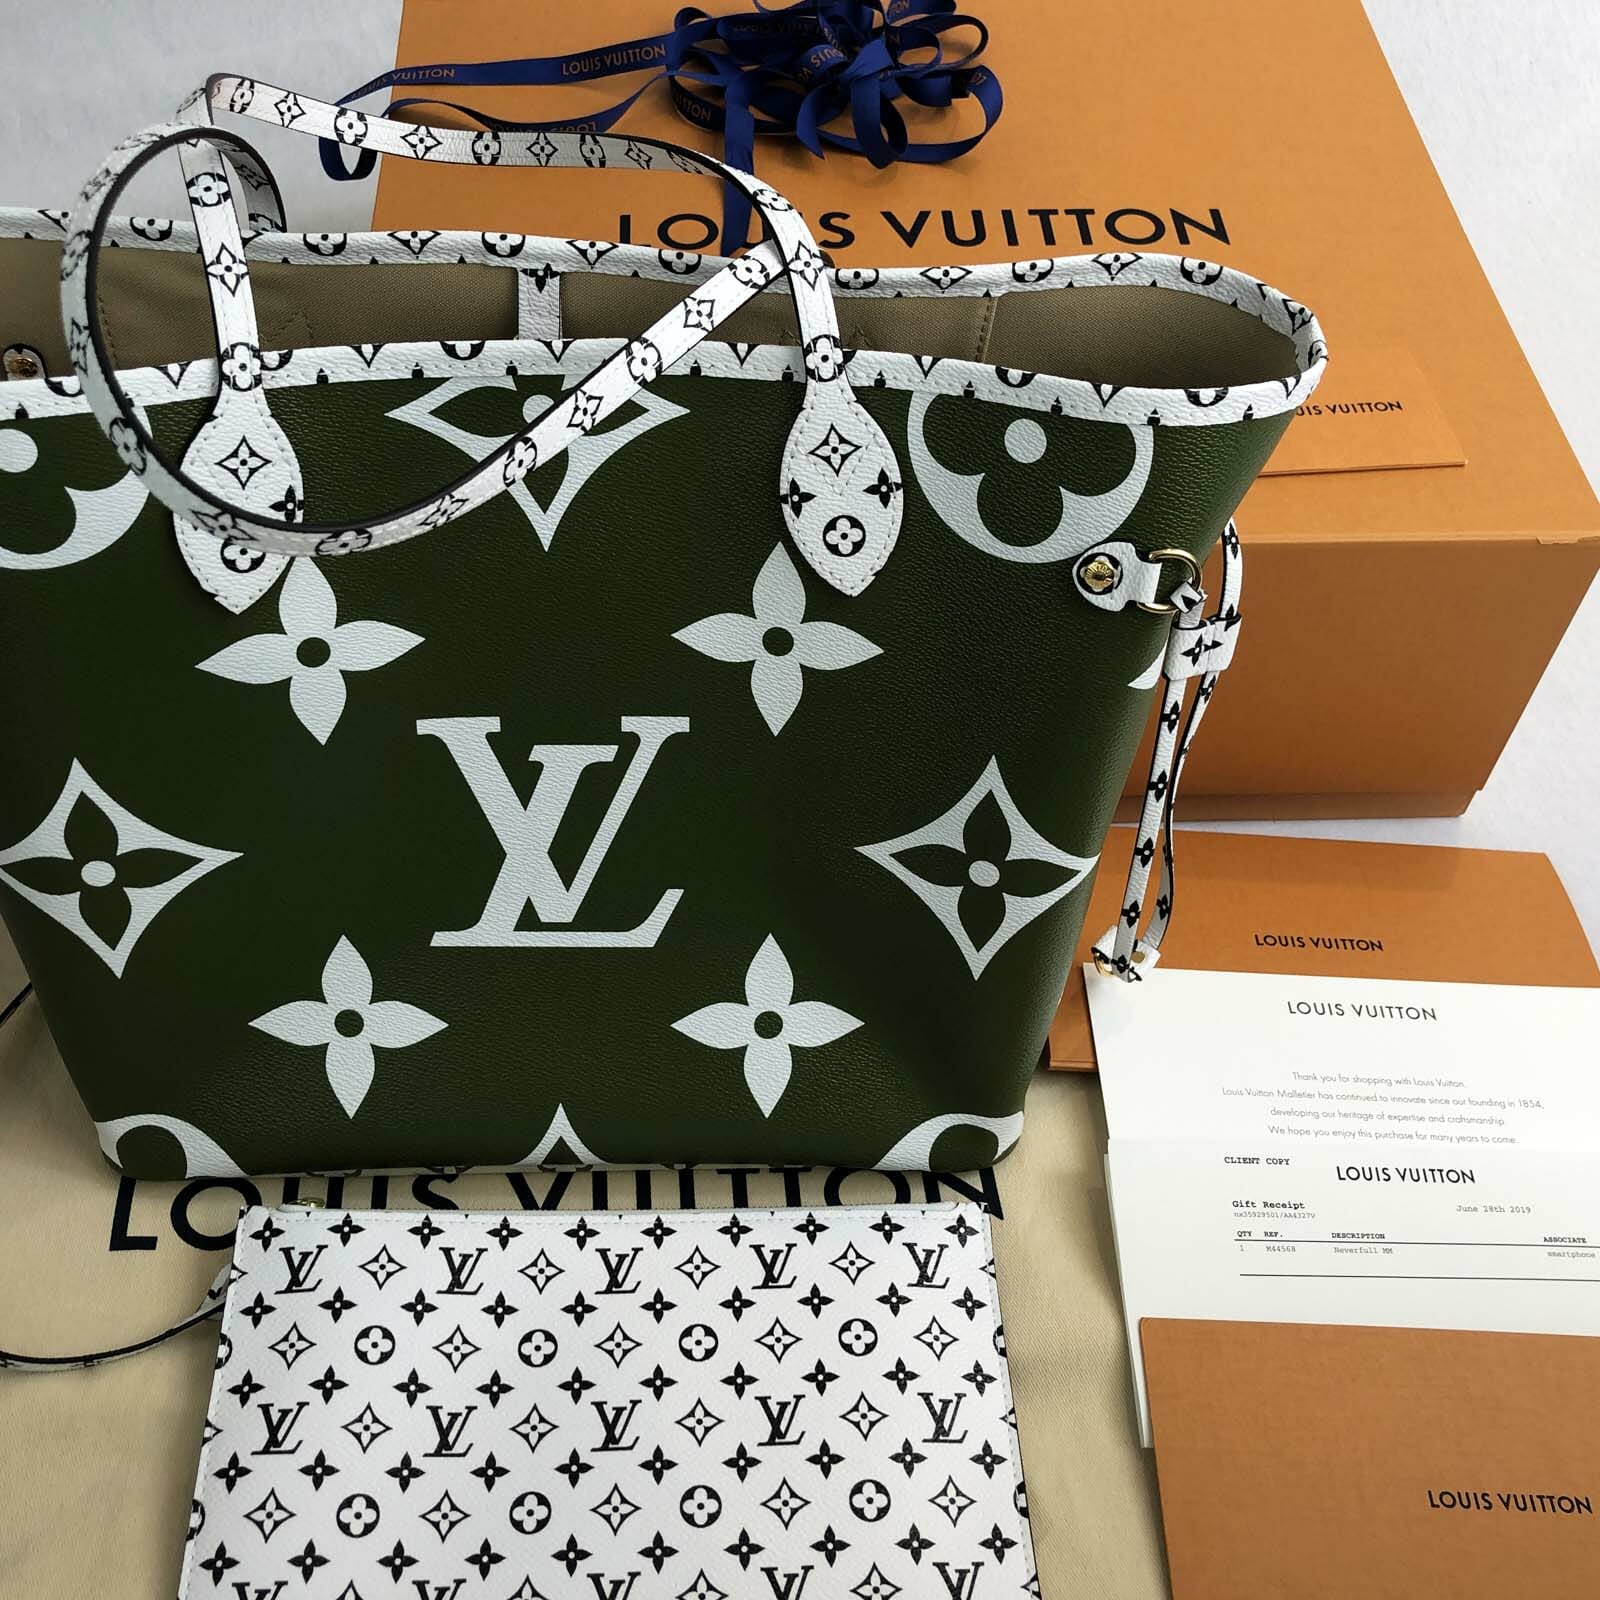 Louis Vuitton Neverfull Giant Monogram Khaki/Cream WITH POUCH